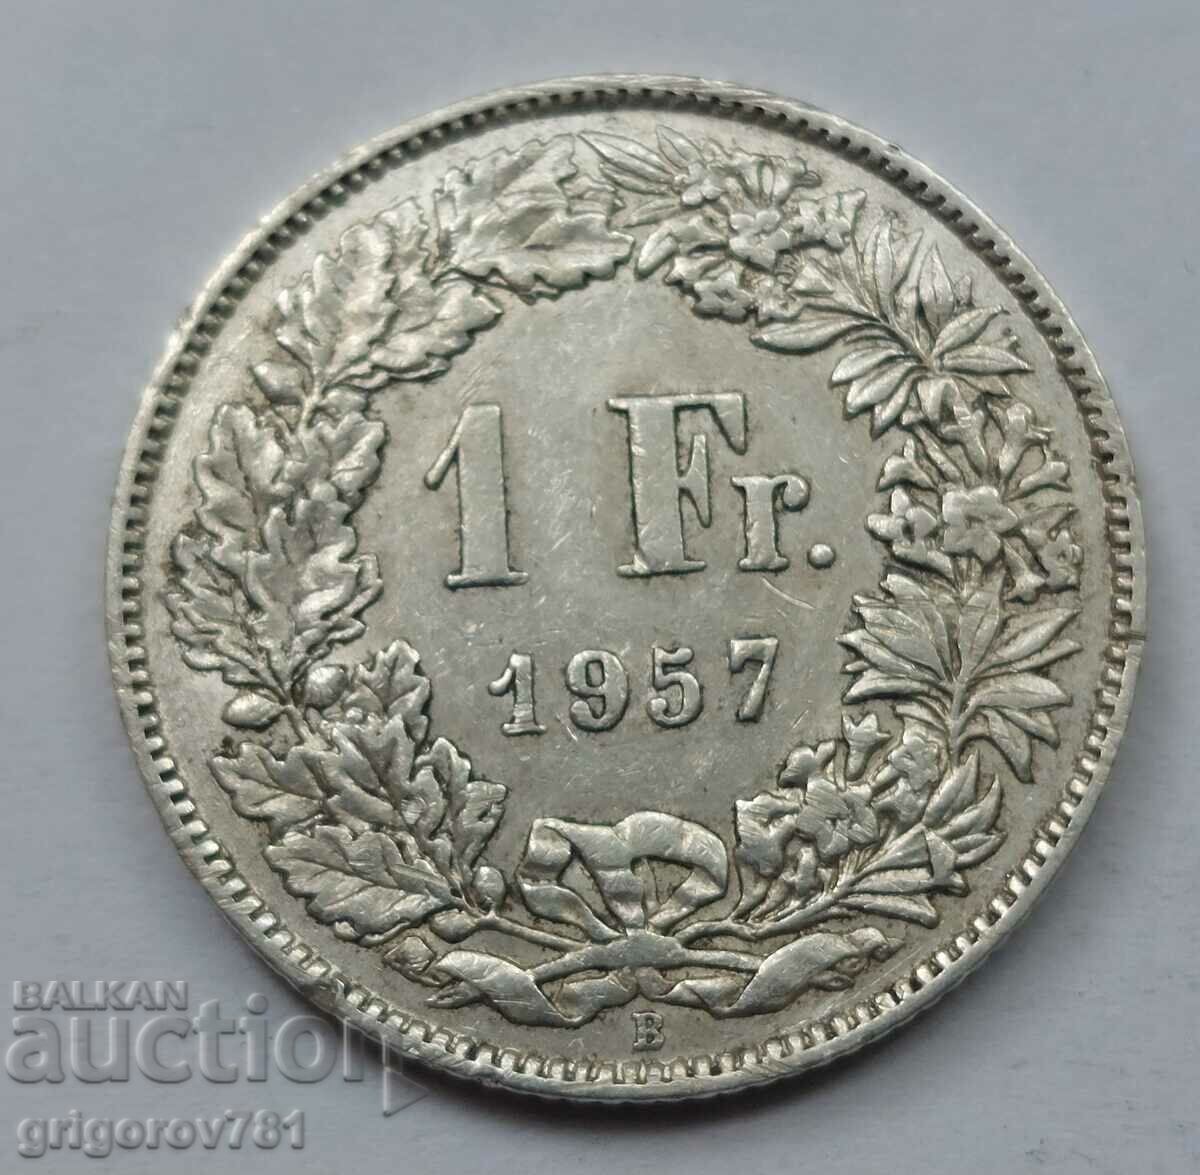 1 Franc Silver Switzerland 1957 B - Silver Coin #27